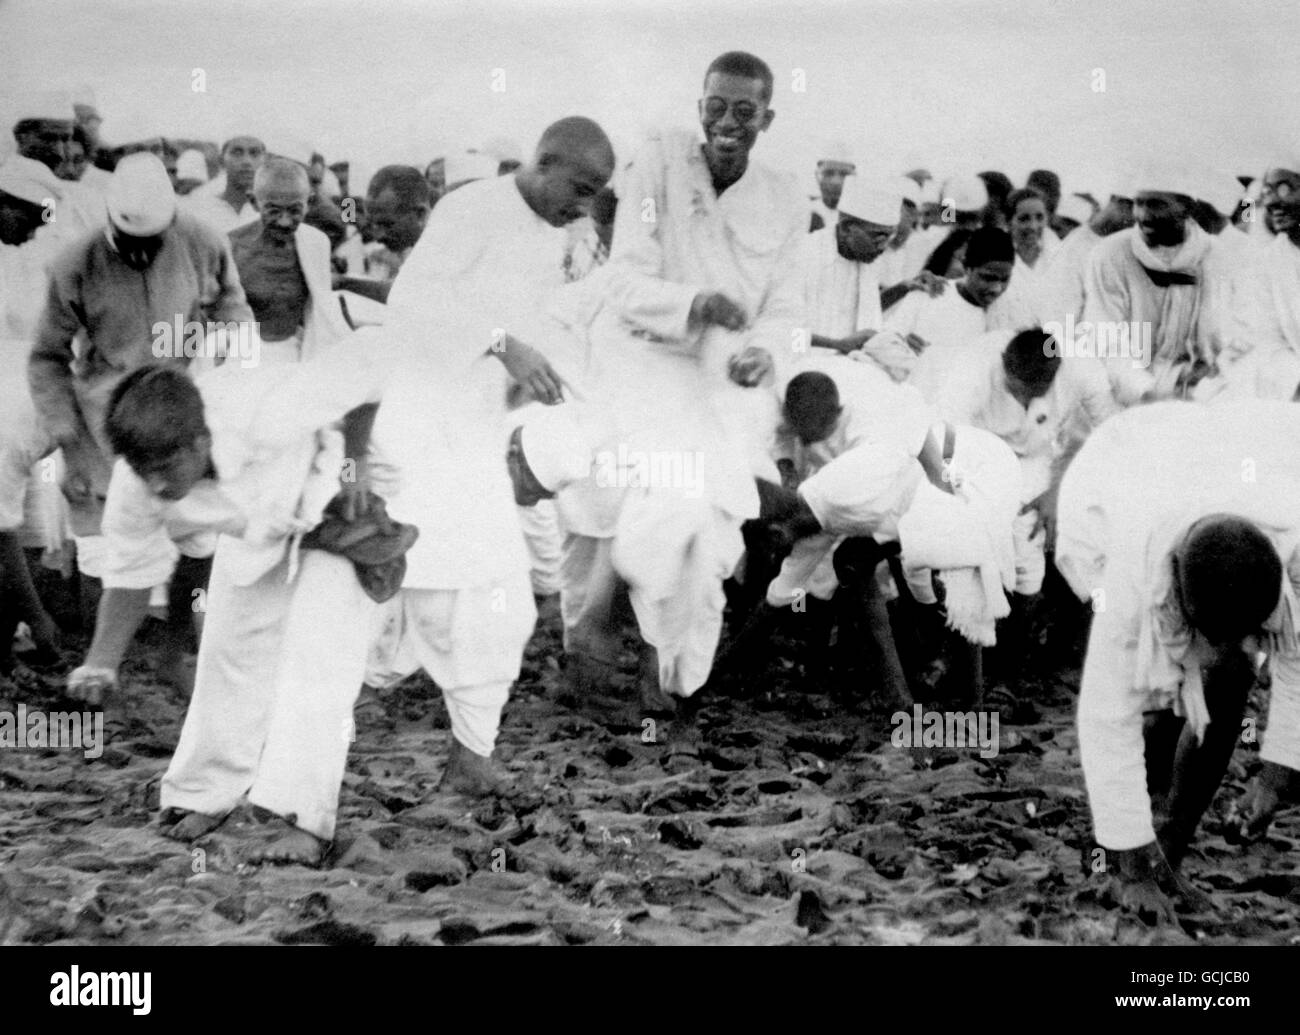 GANDHI: BREAKING SALT LAWS 1930 Stock Photo - Alamy